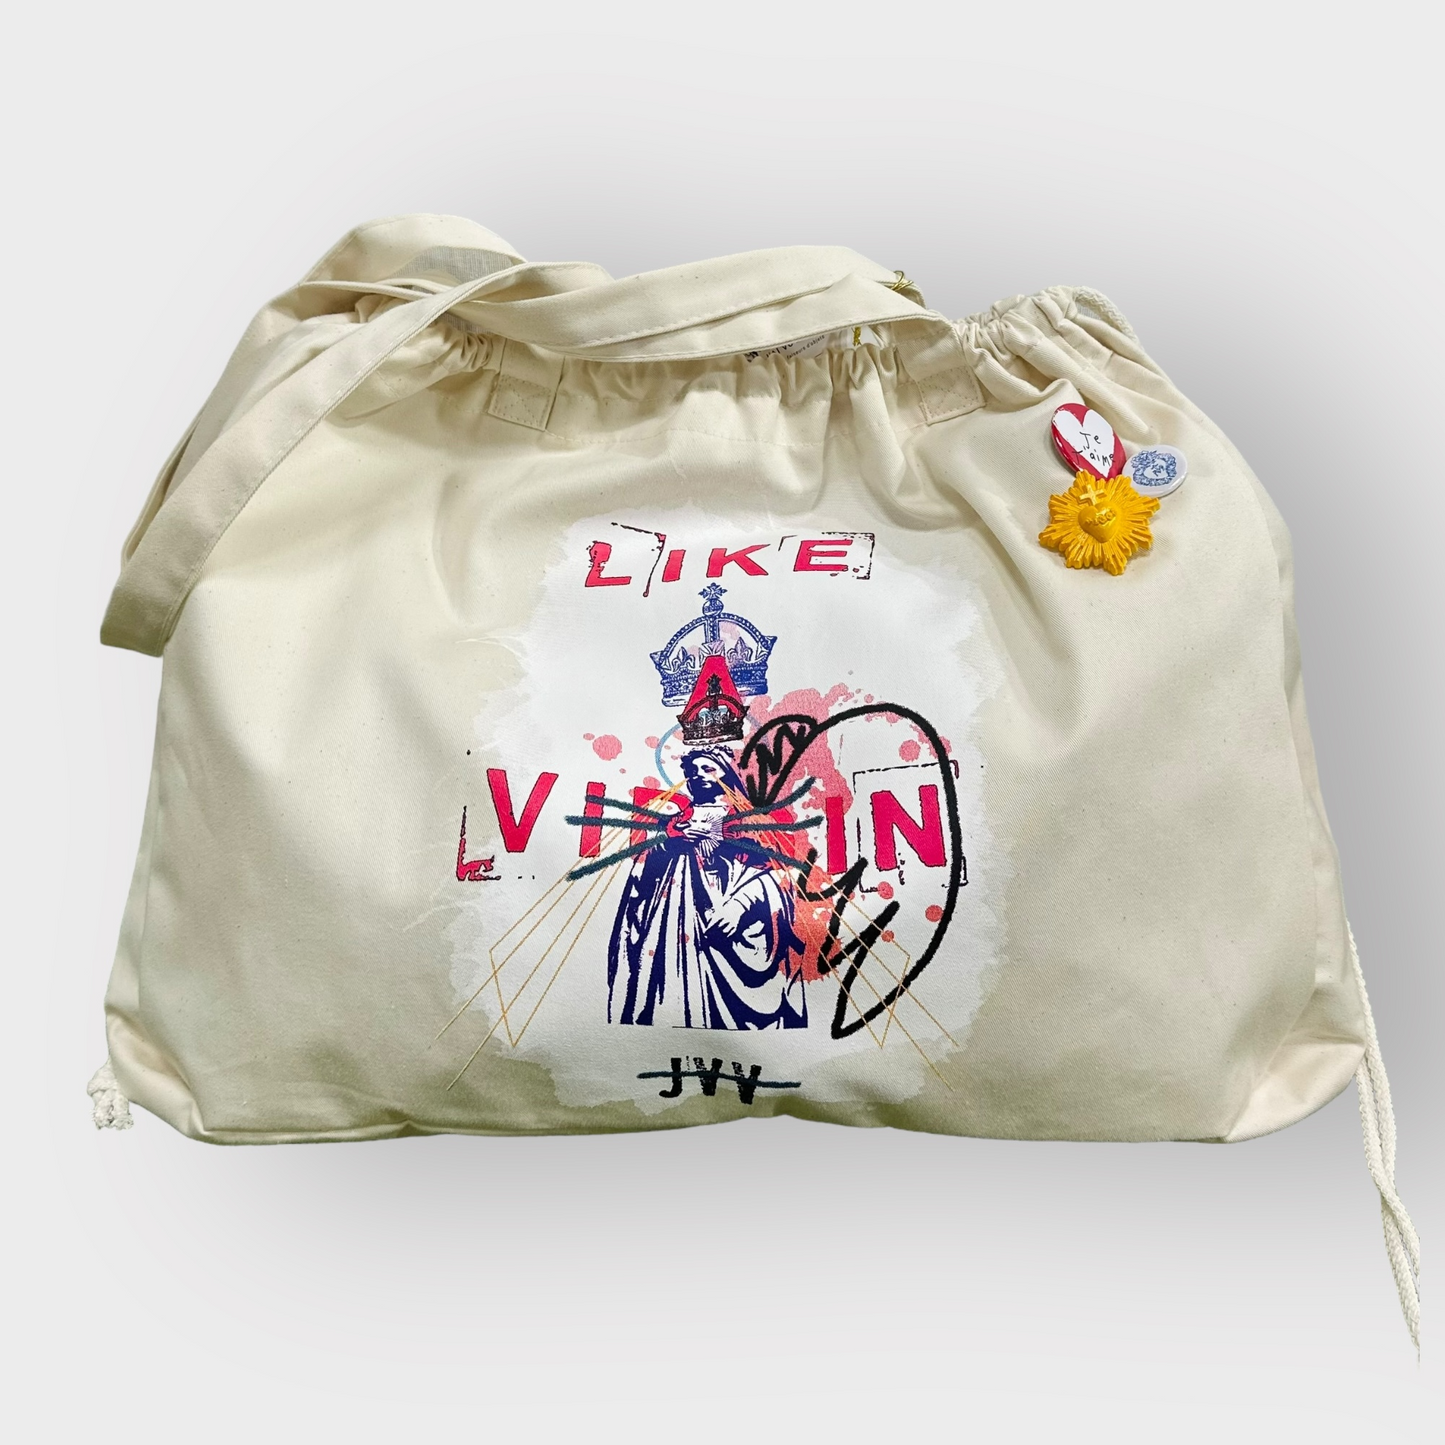 XXL shopping bags - I saw the Virgin